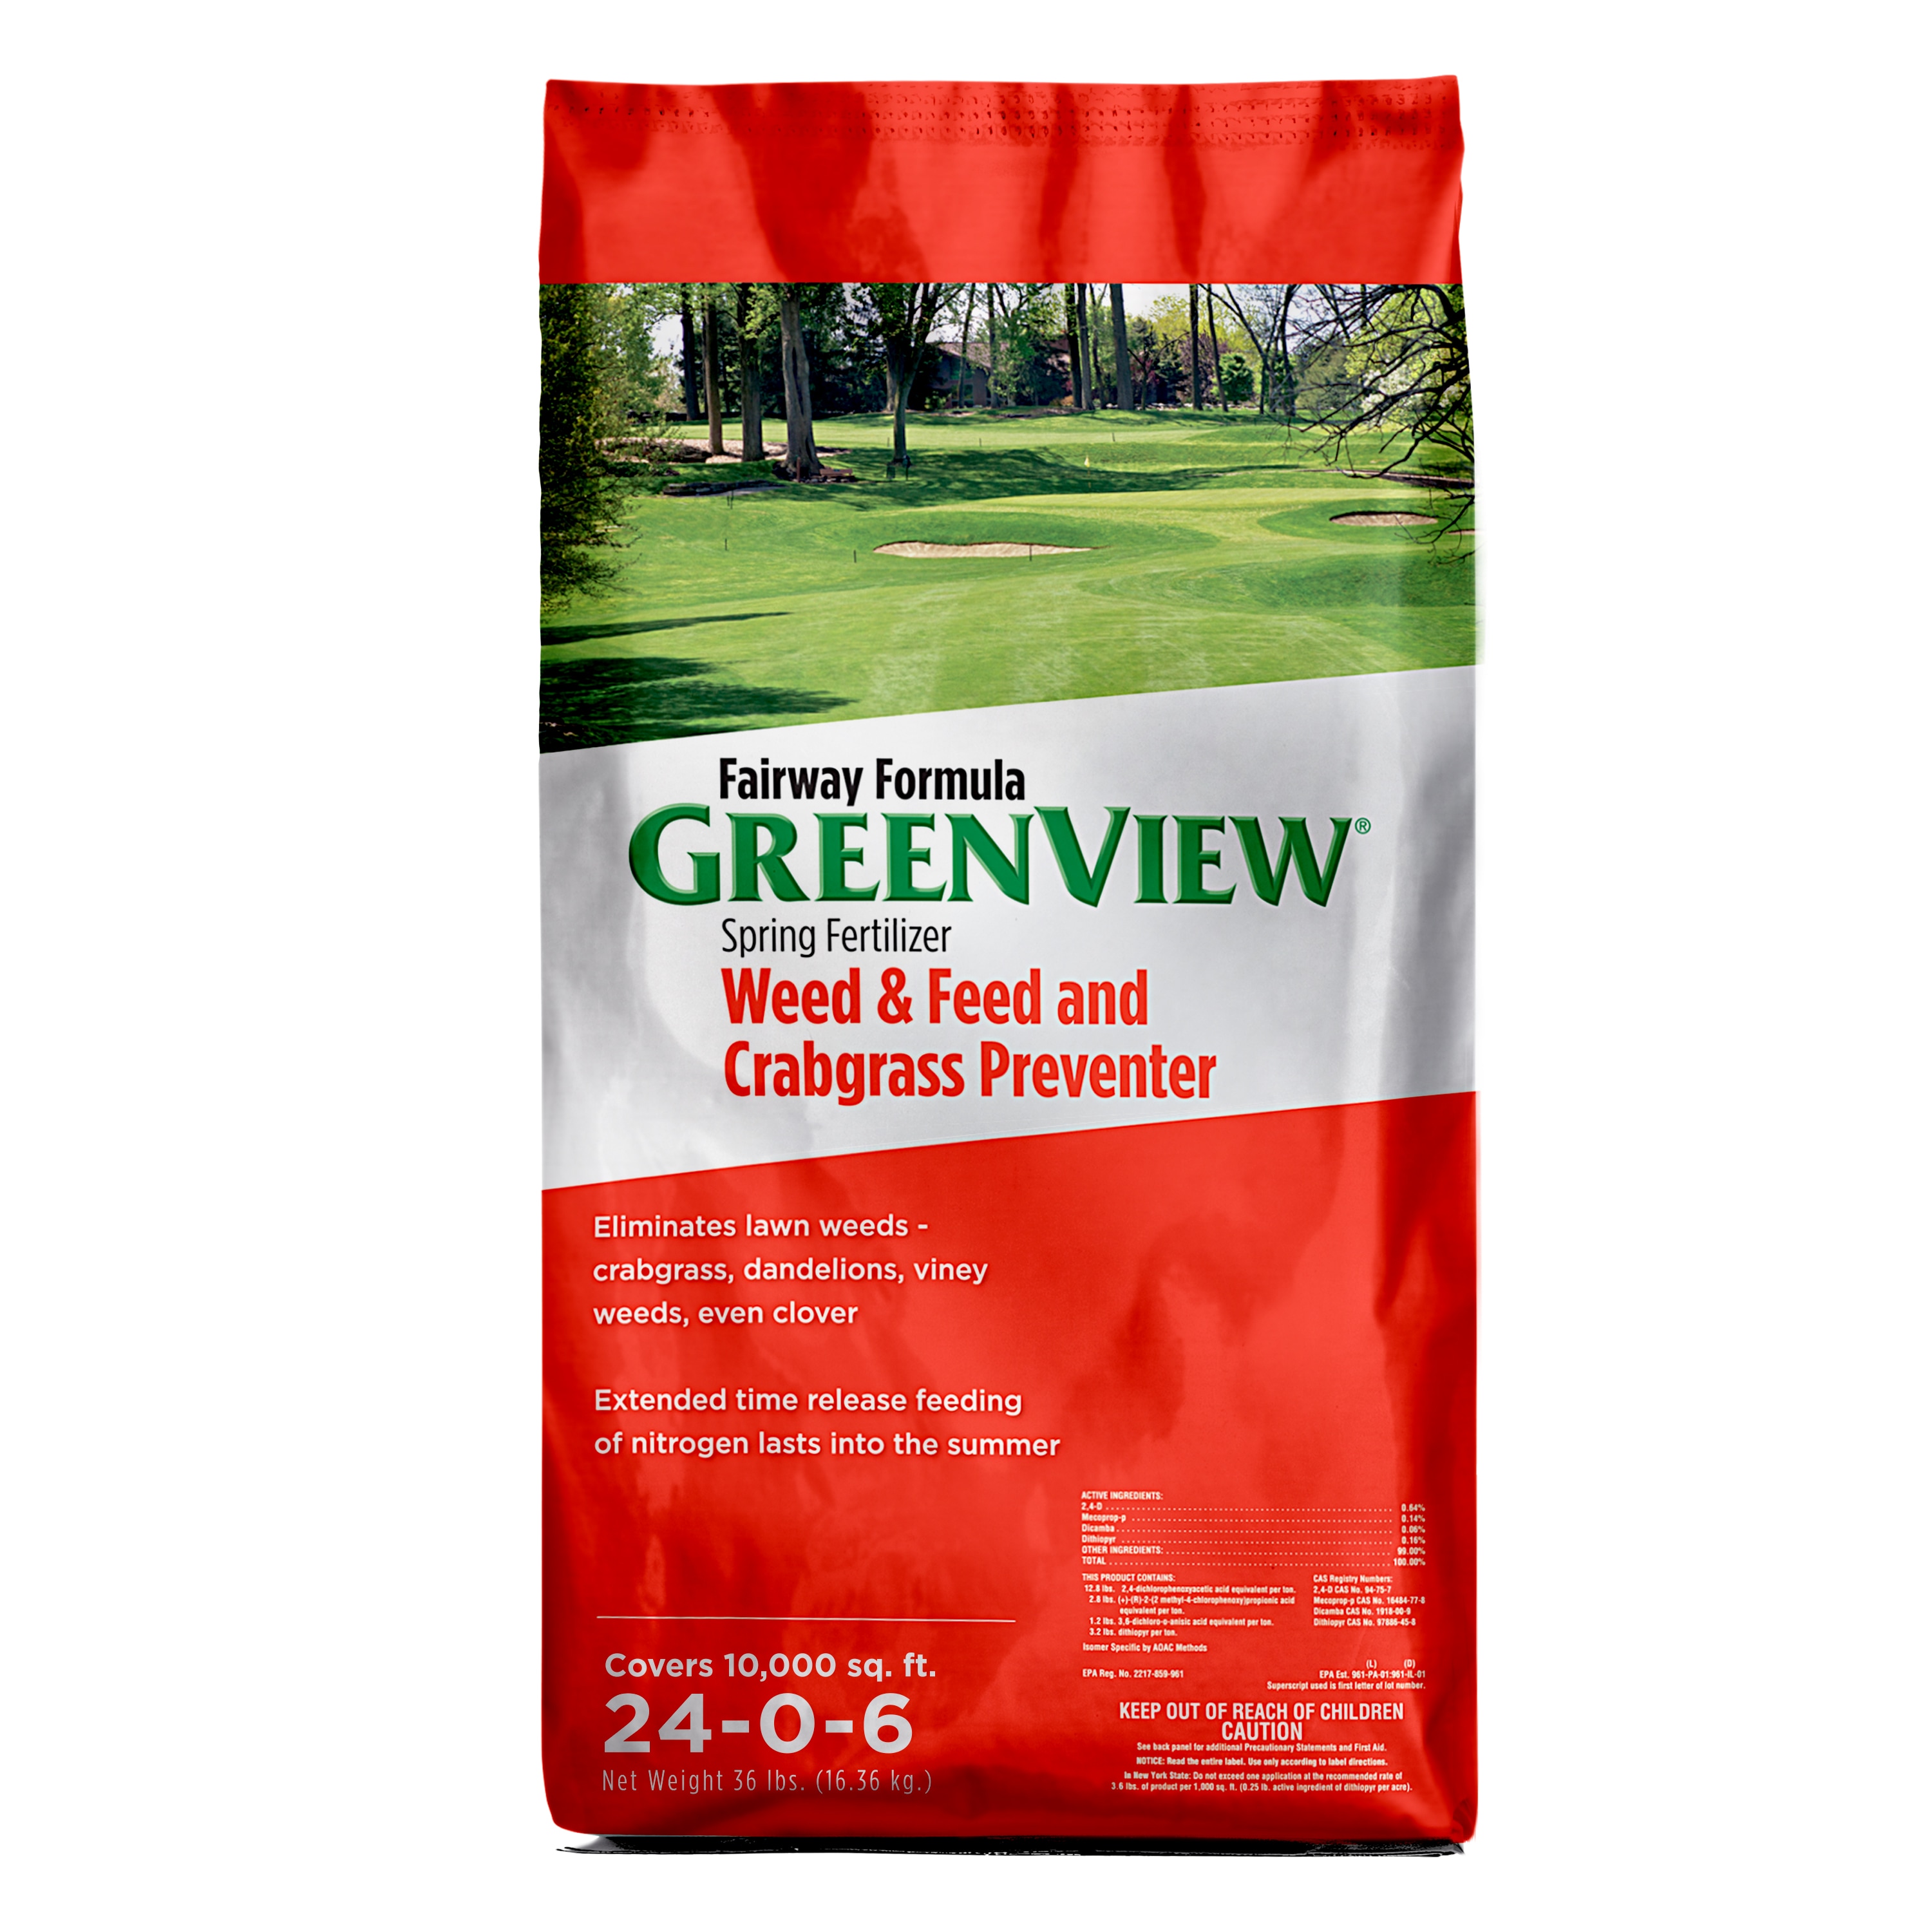 Image of GreenView Fairway Formula Fertilizer + Crabgrass Preventer product